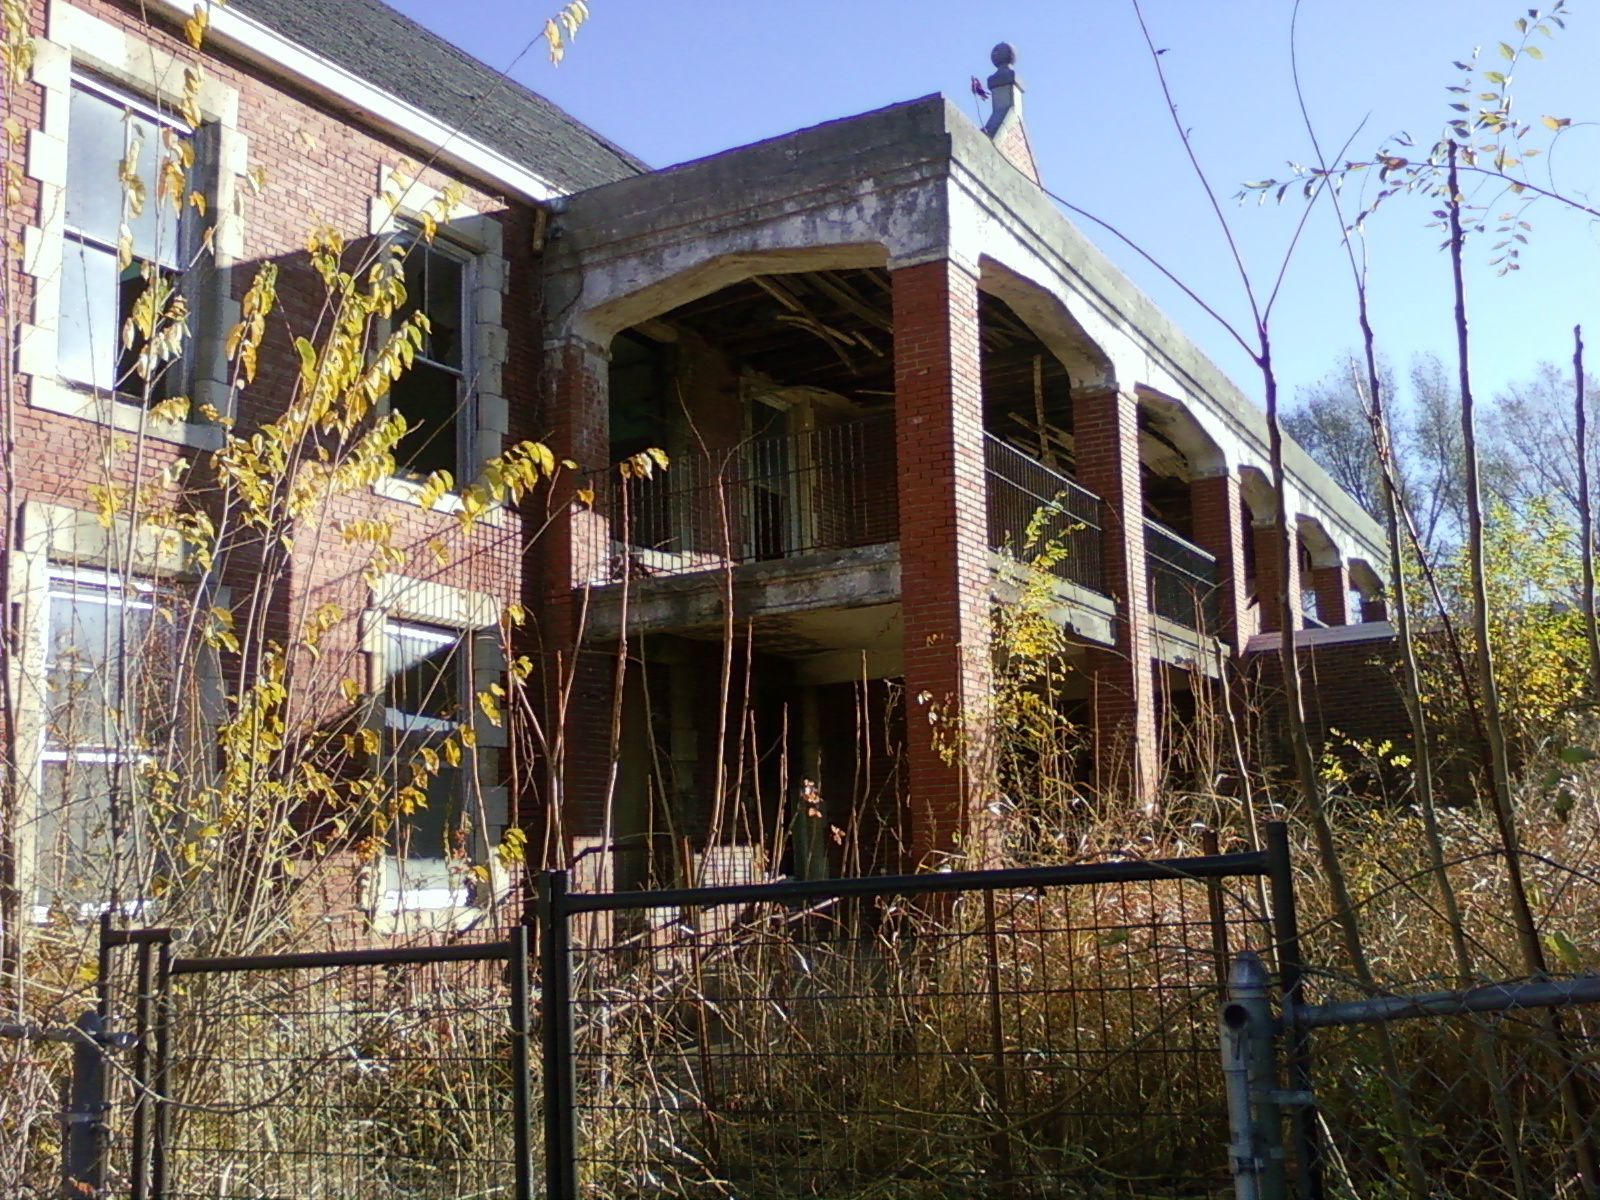 Oddfellows Boys Home, Liberty, MO | Abandoned Spaces | Pinterest ...